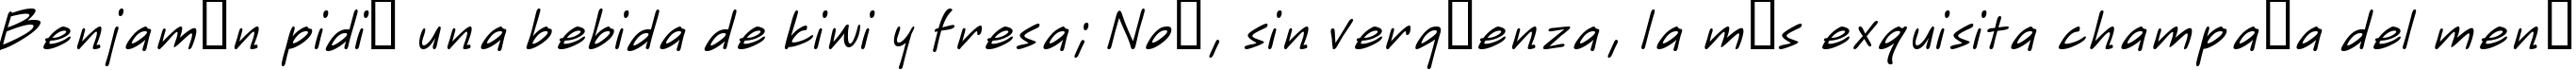 Пример написания шрифтом Sketchpad Note  Italic текста на испанском